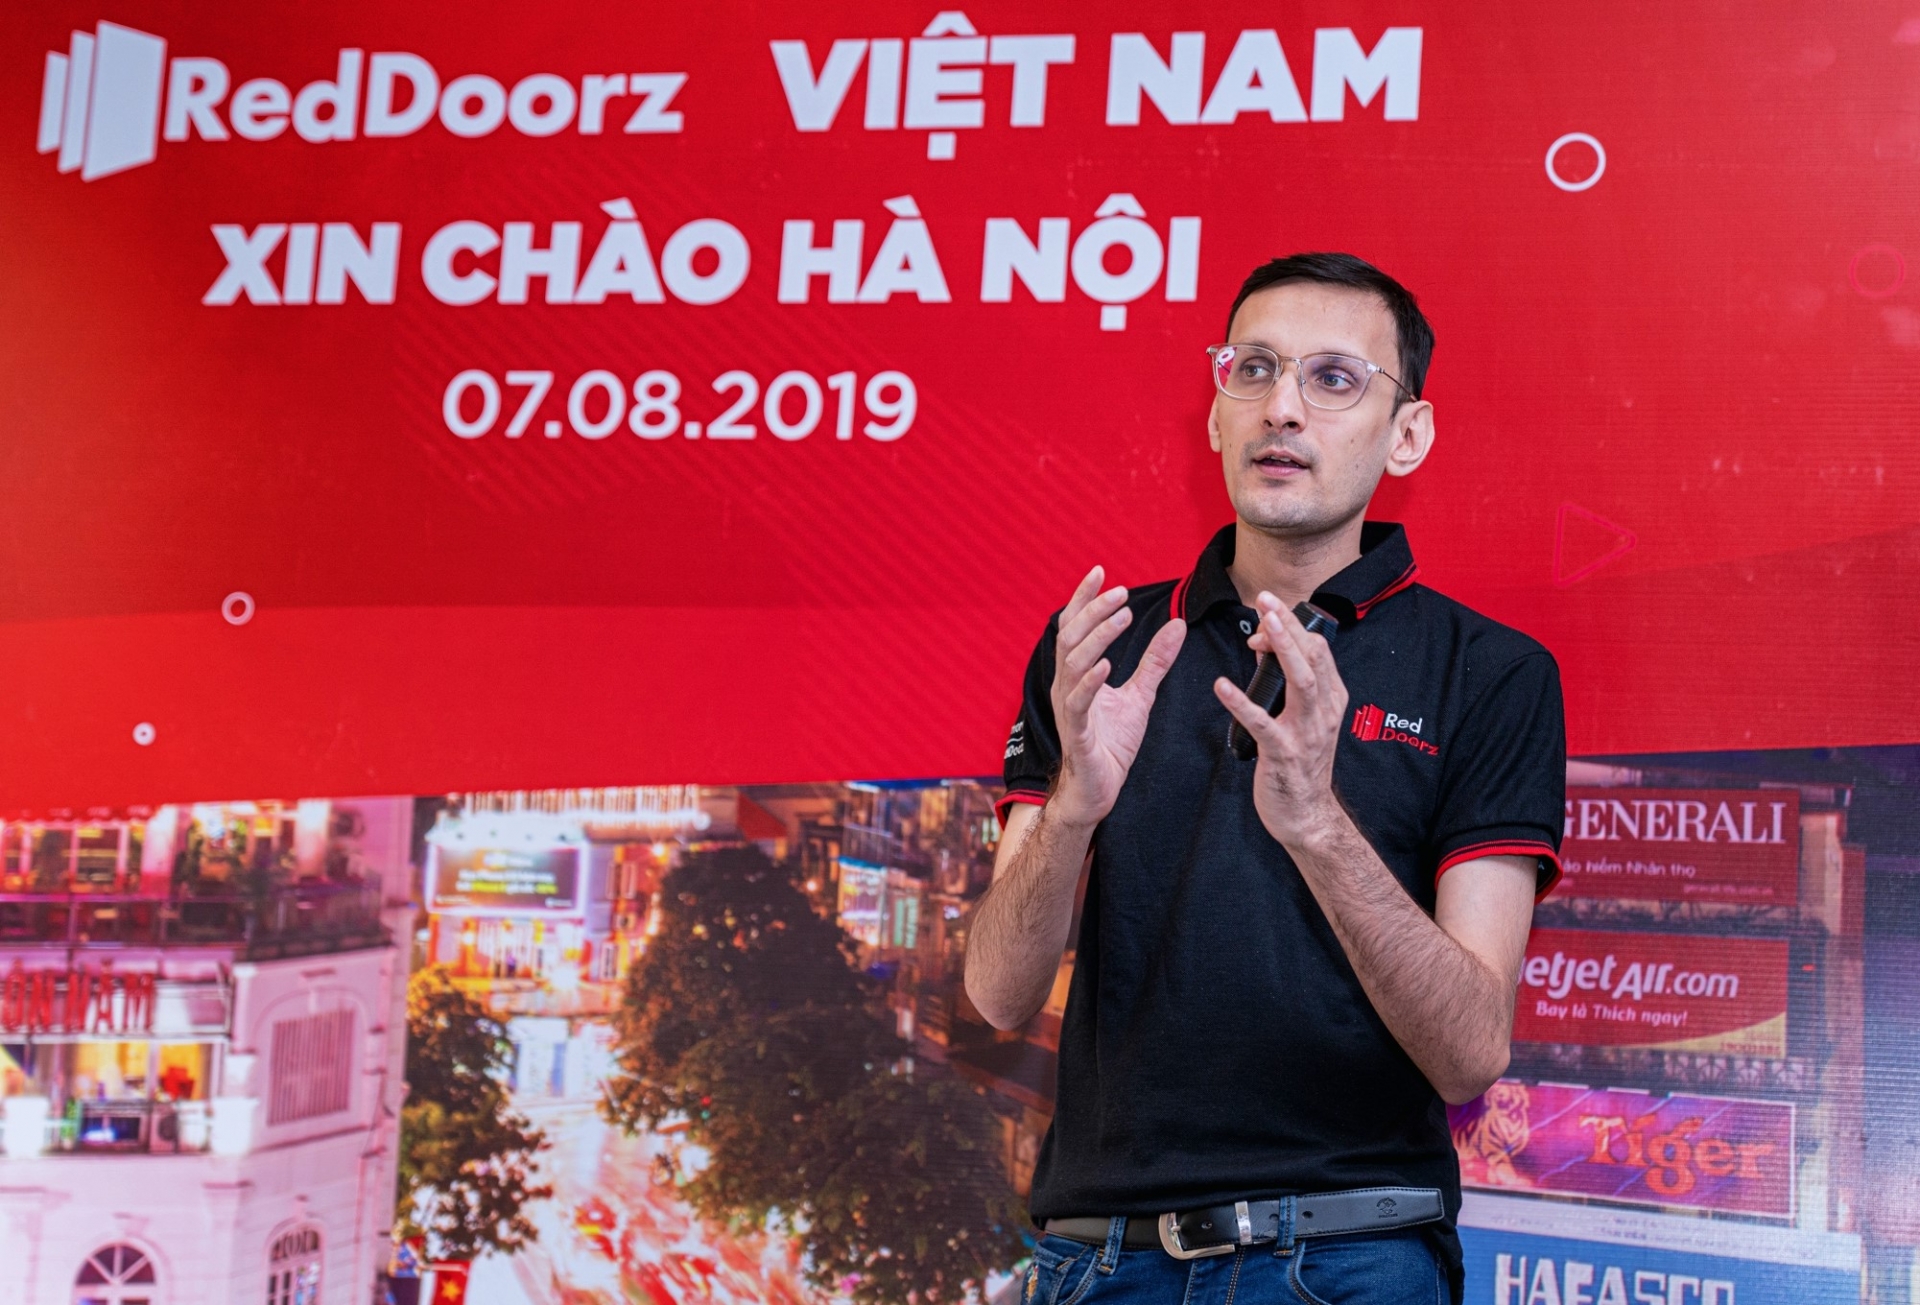 reddoorzs tech platform to promote budget hotels in vietnam